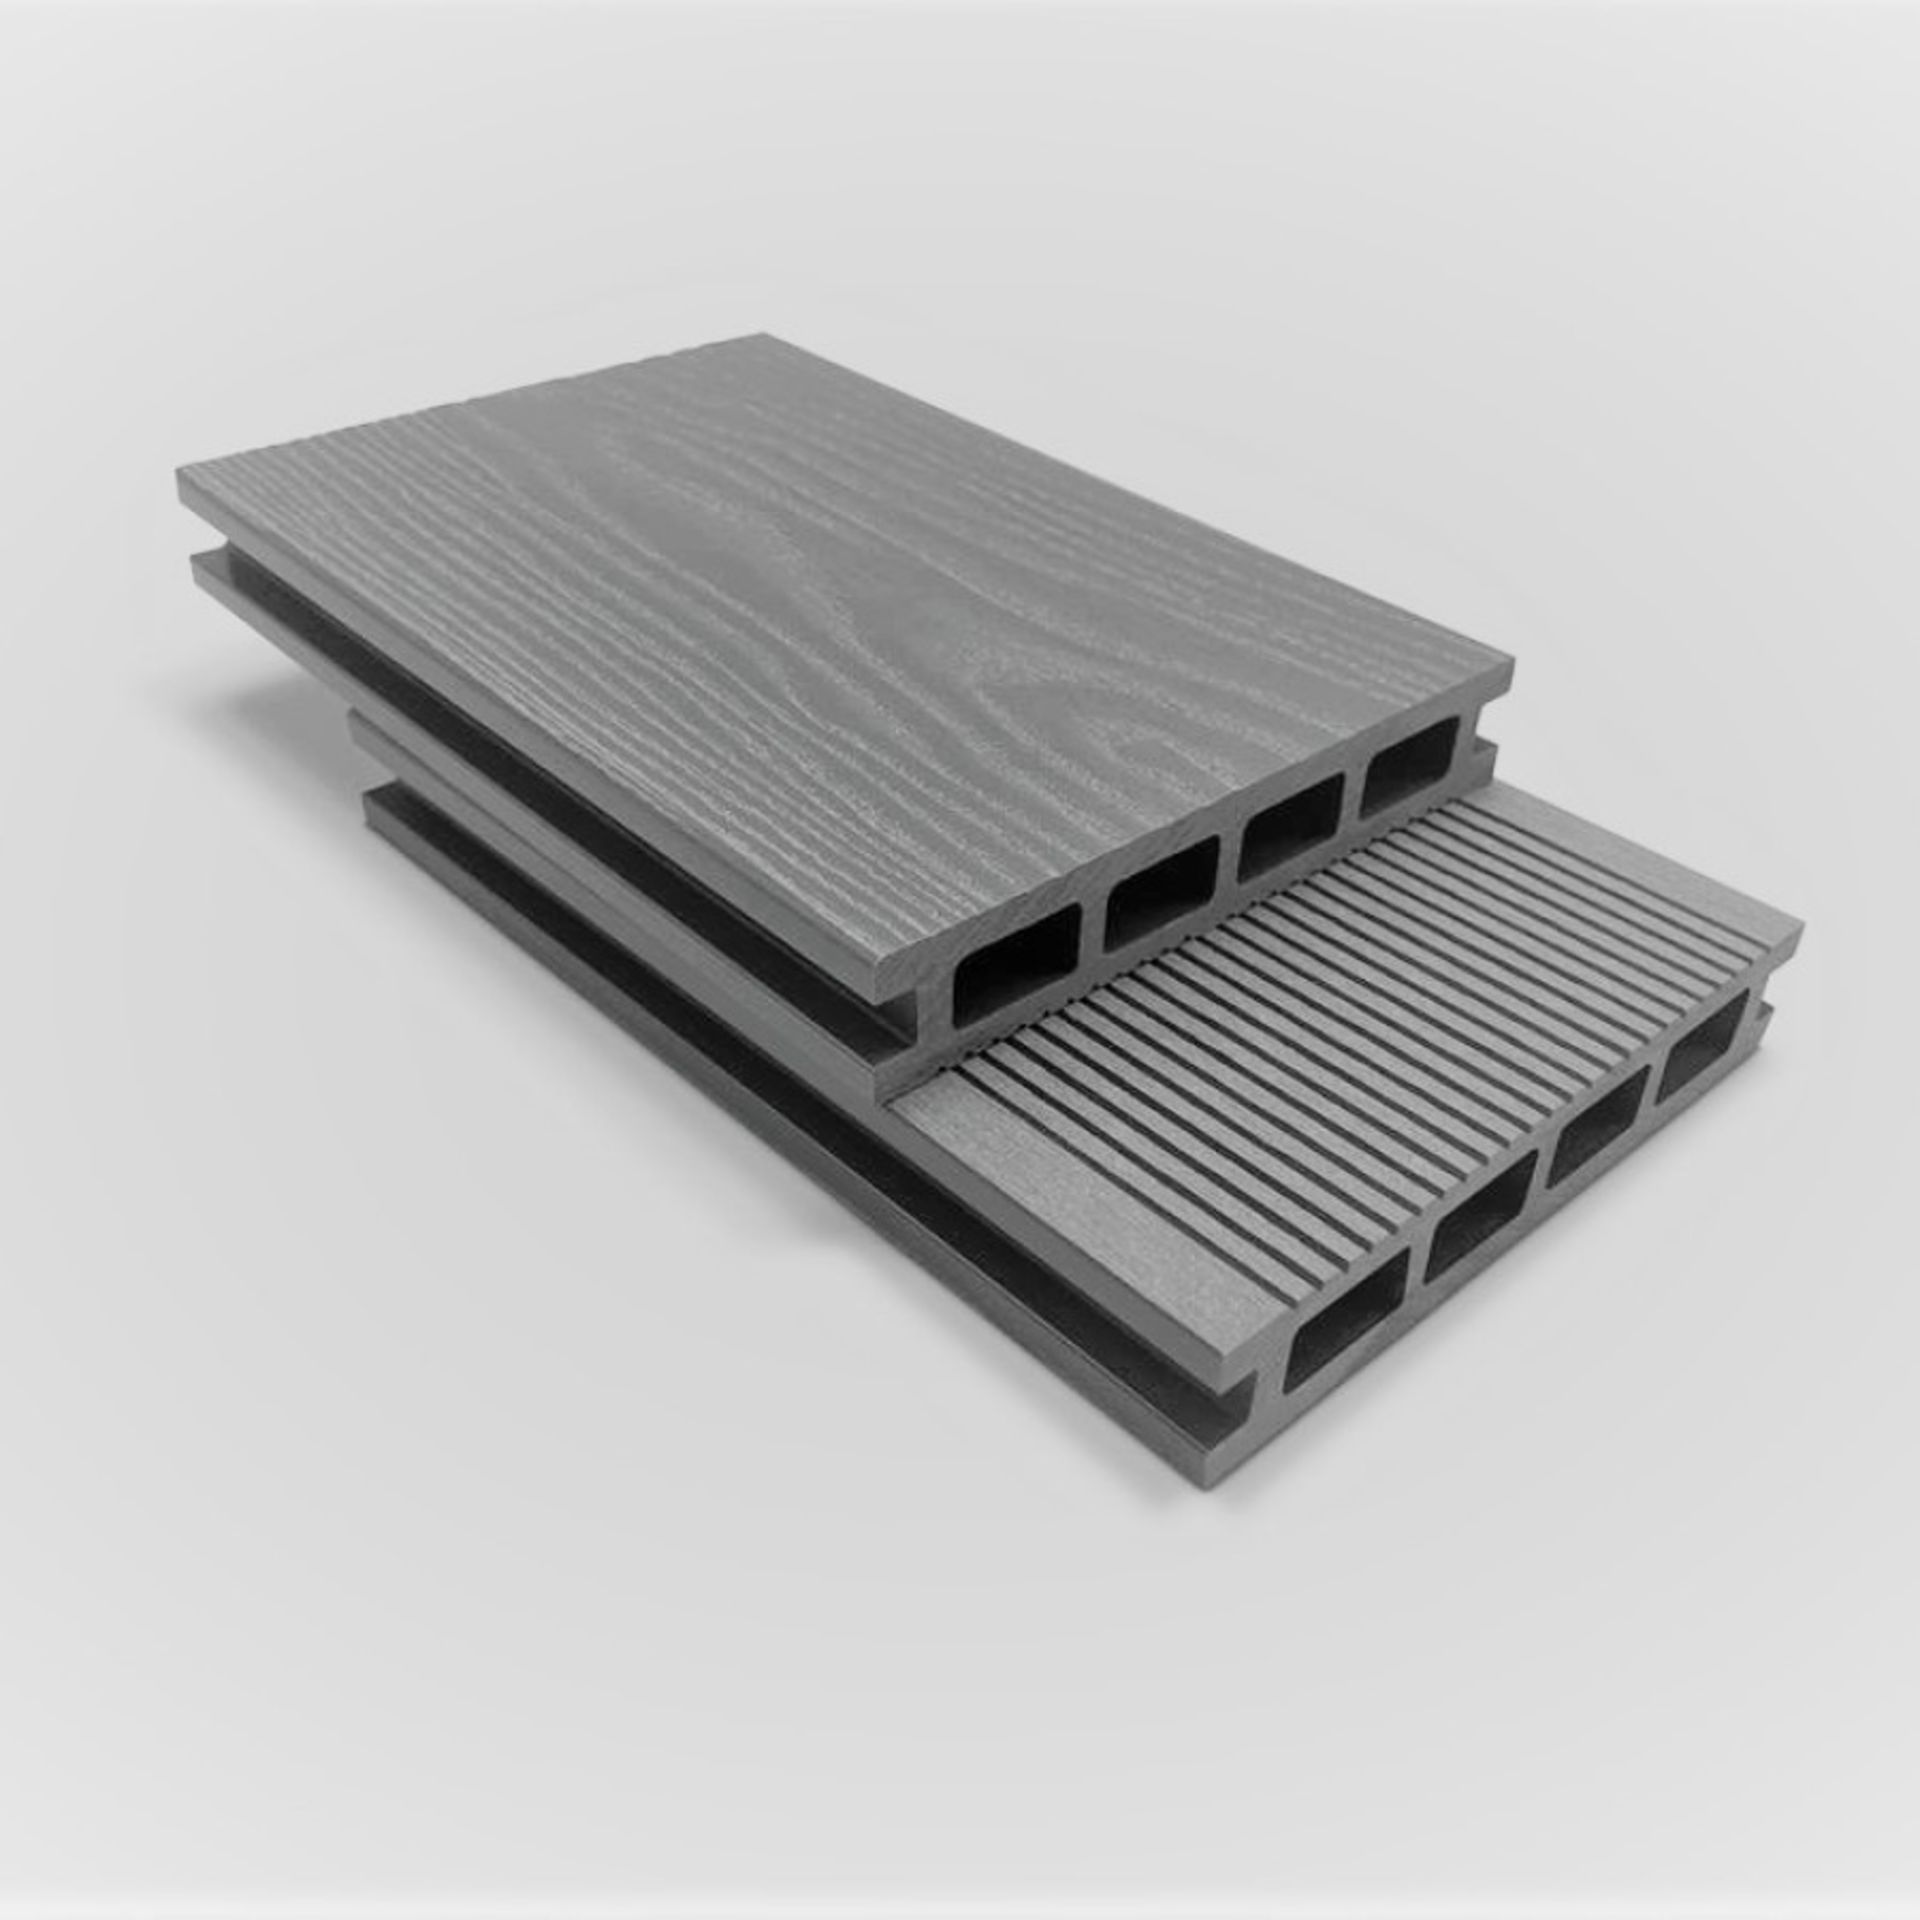 Complete Diy Composite Decking Kit 3m x 3m - Deep Embossed Steel Grey - Image 2 of 2